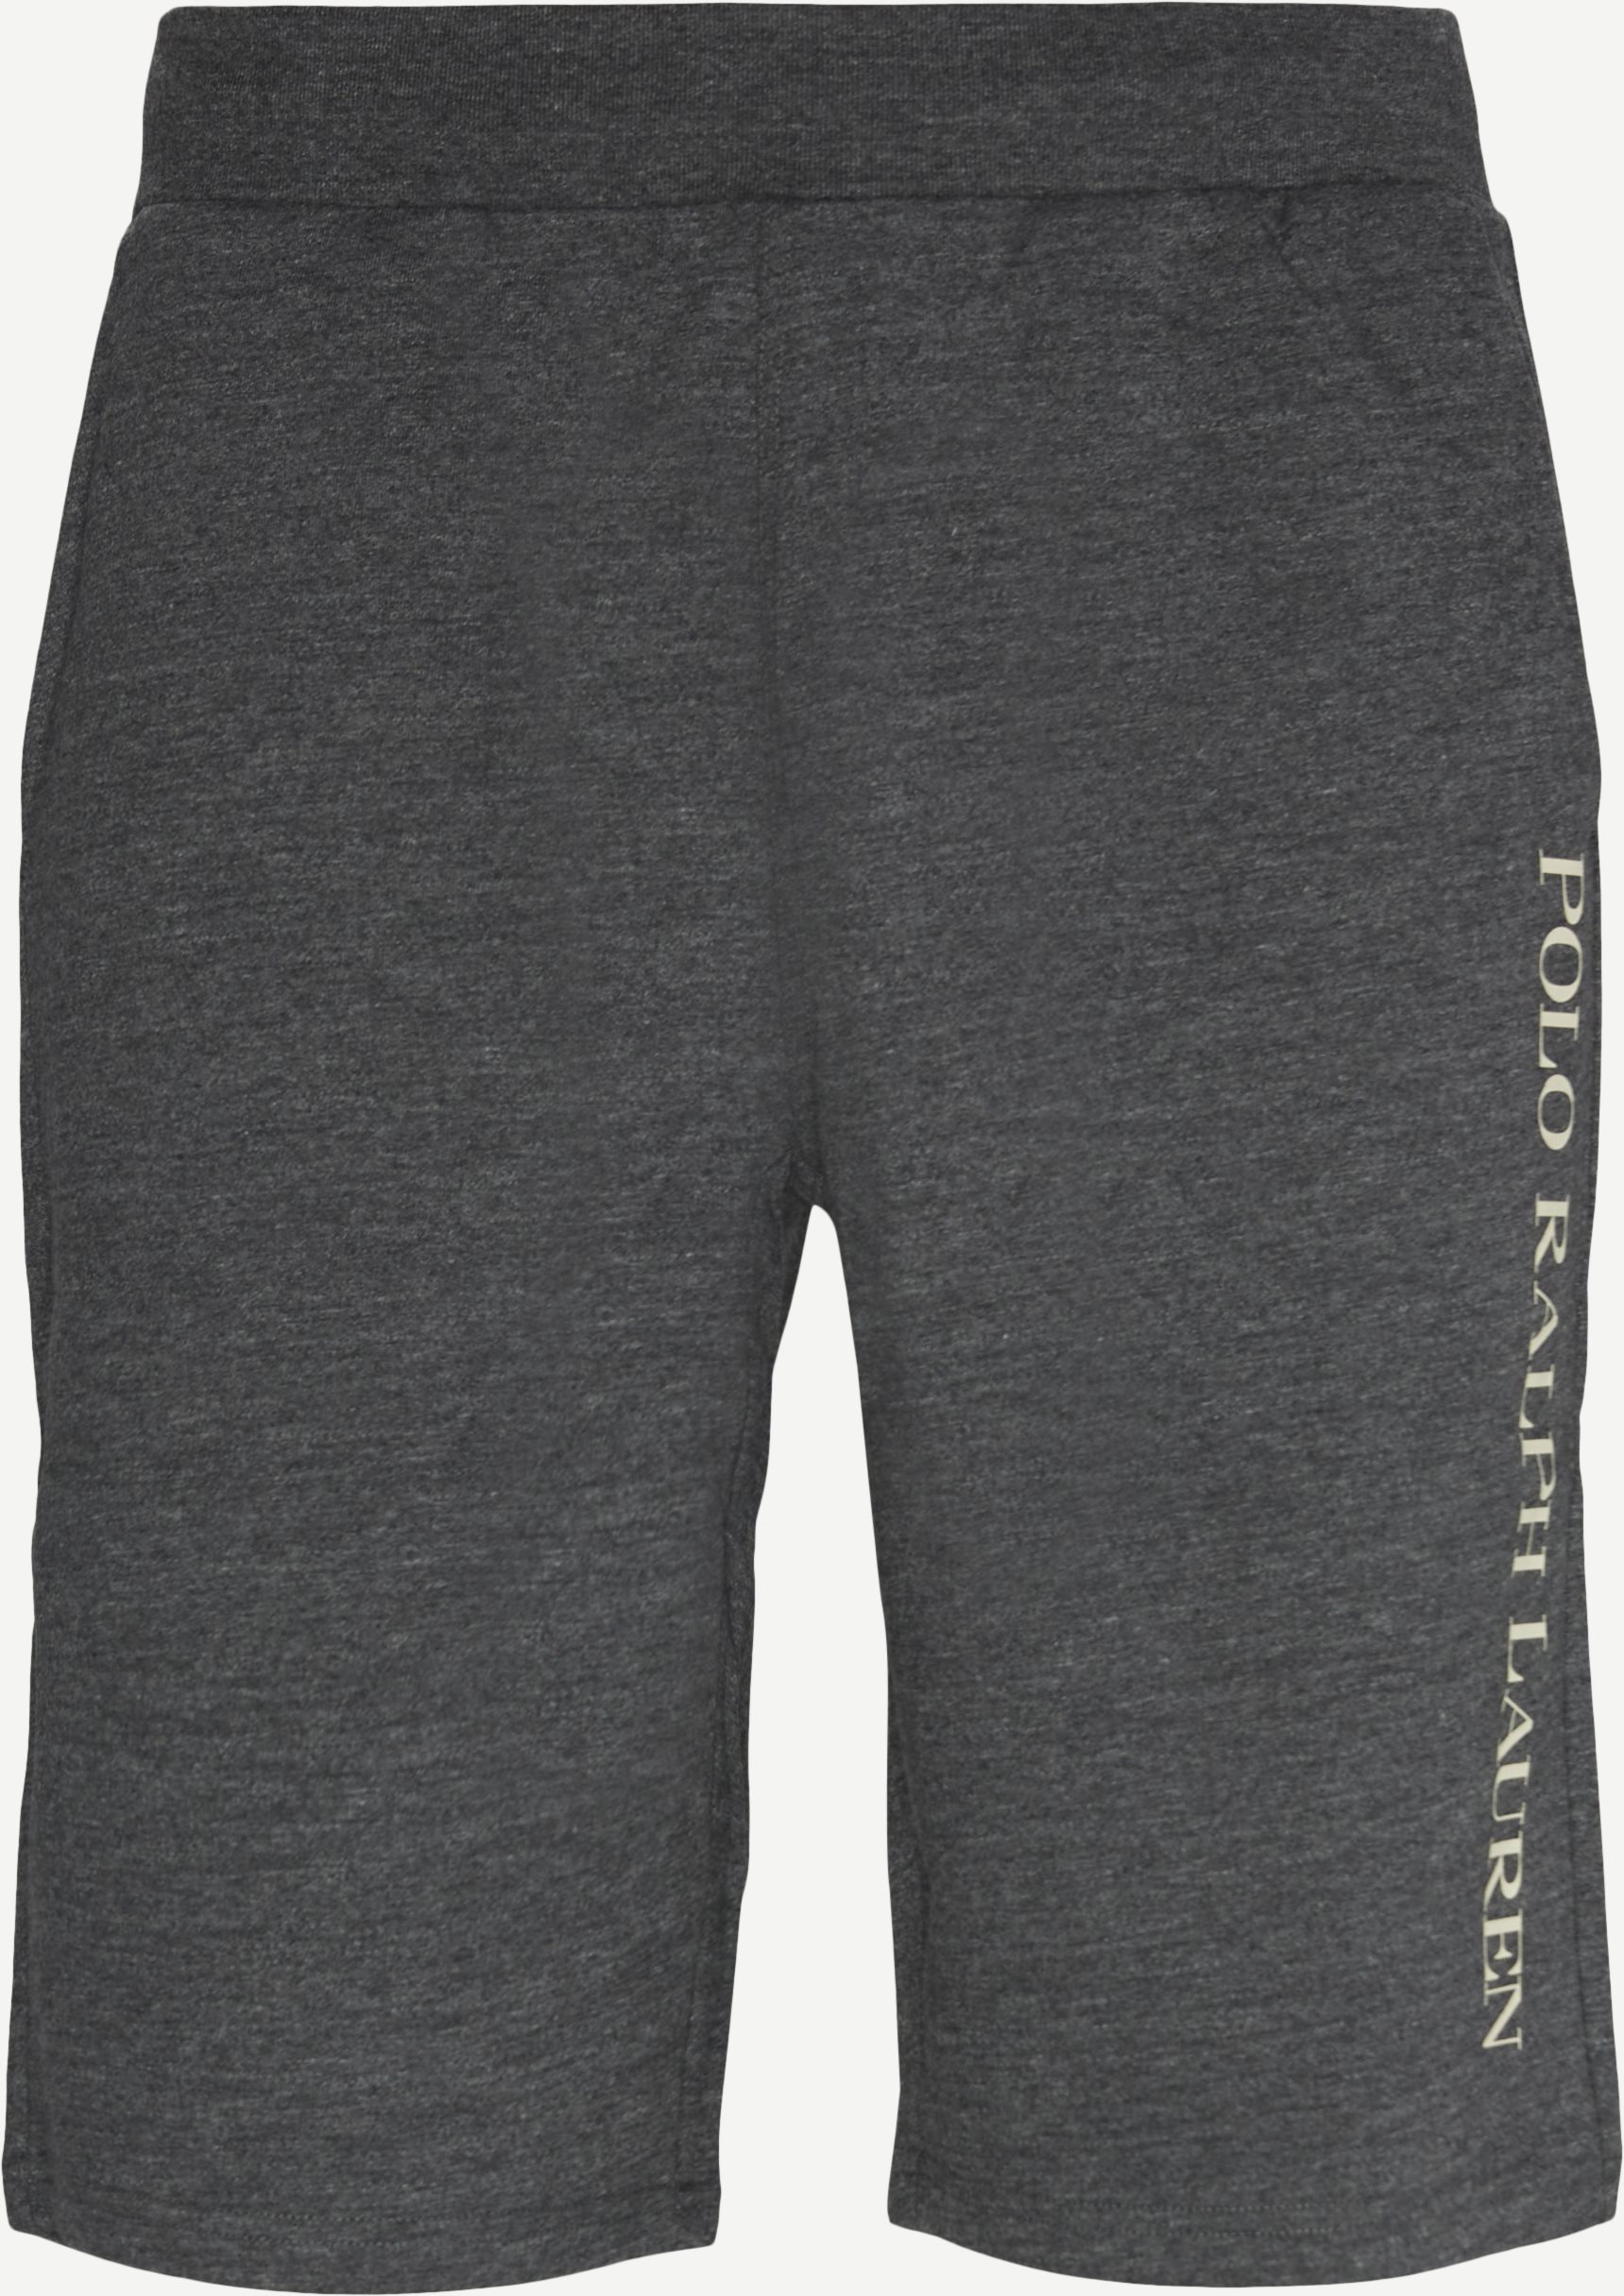 714830294 Shorts mit Logo - Shorts - Regular fit - Grau